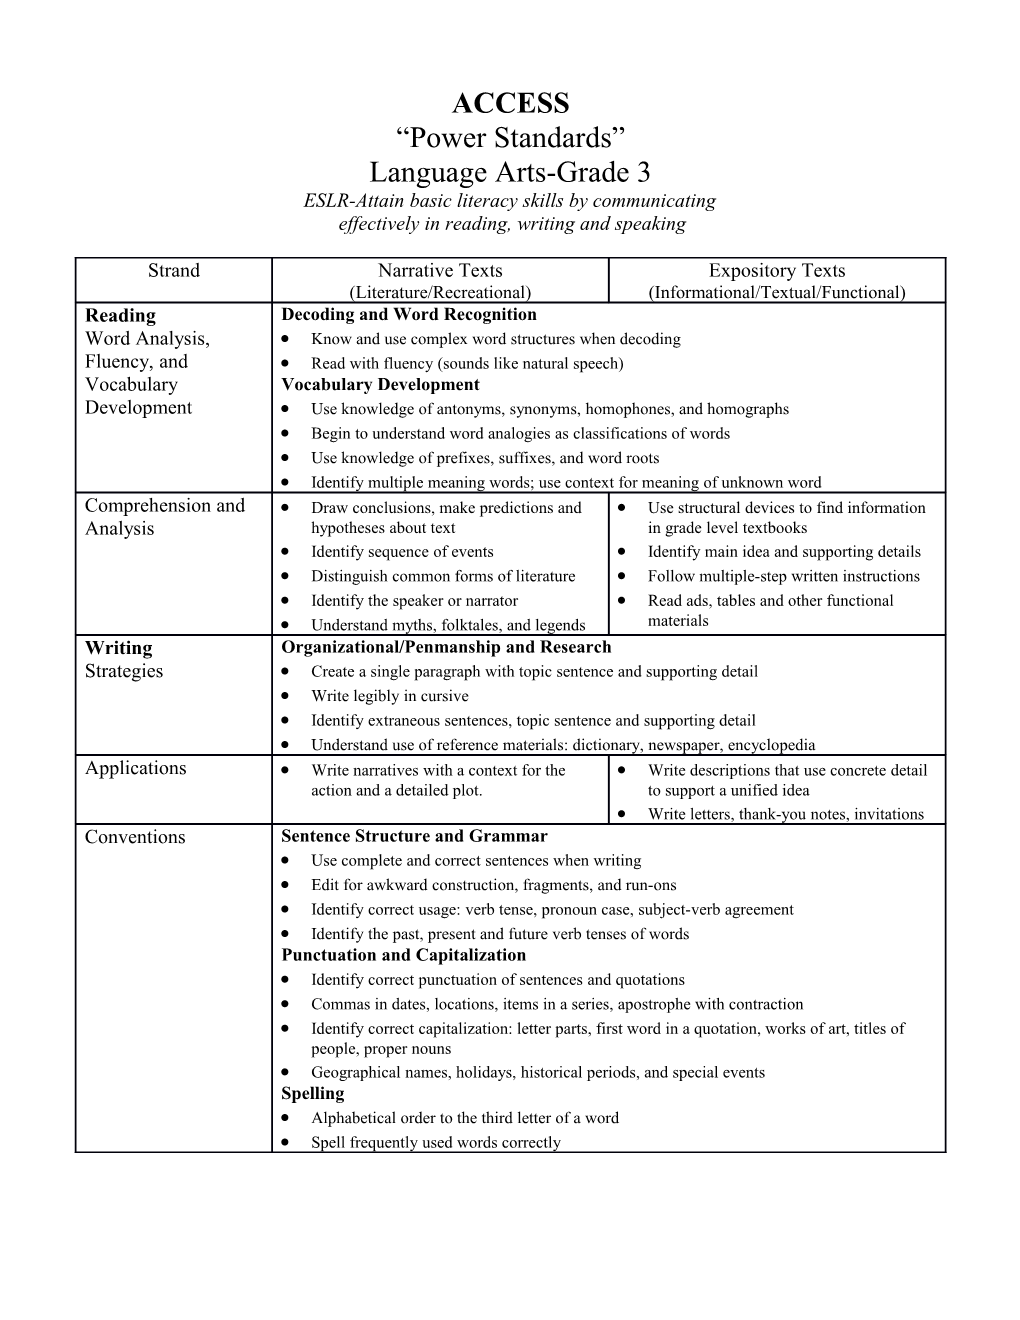 Language Arts Power Standards